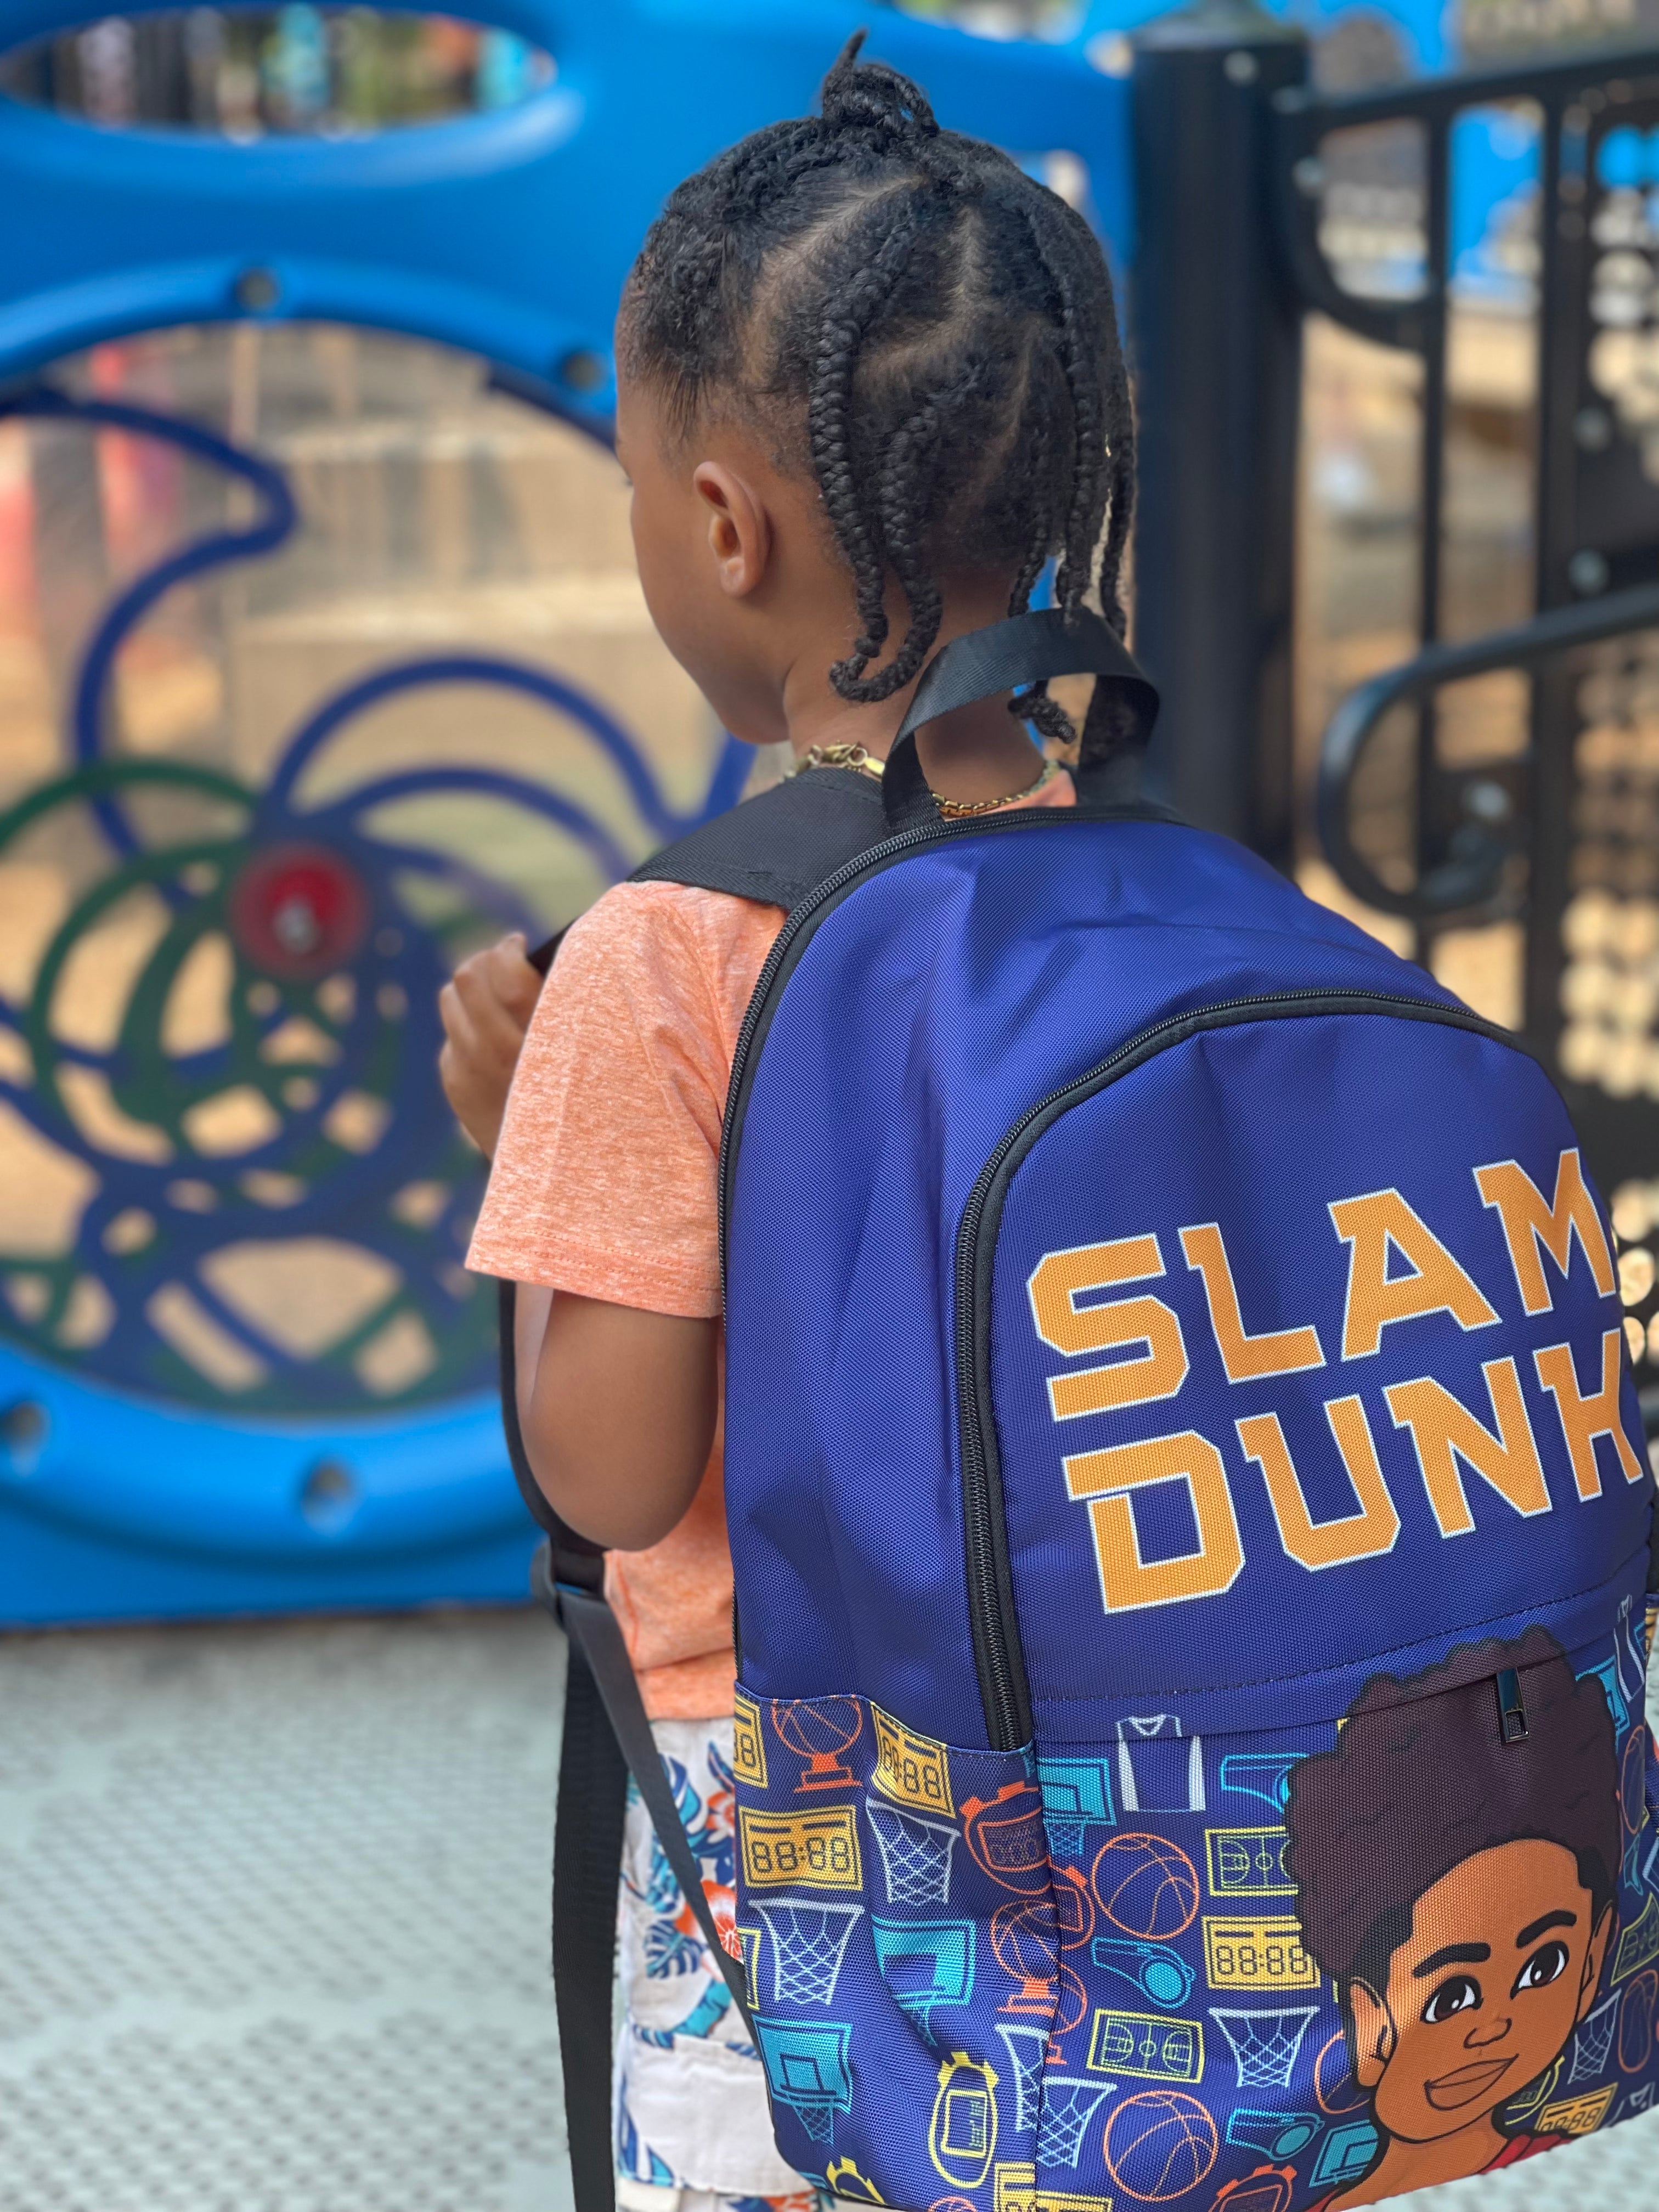 Slam Dunk Bball Boy Backpack